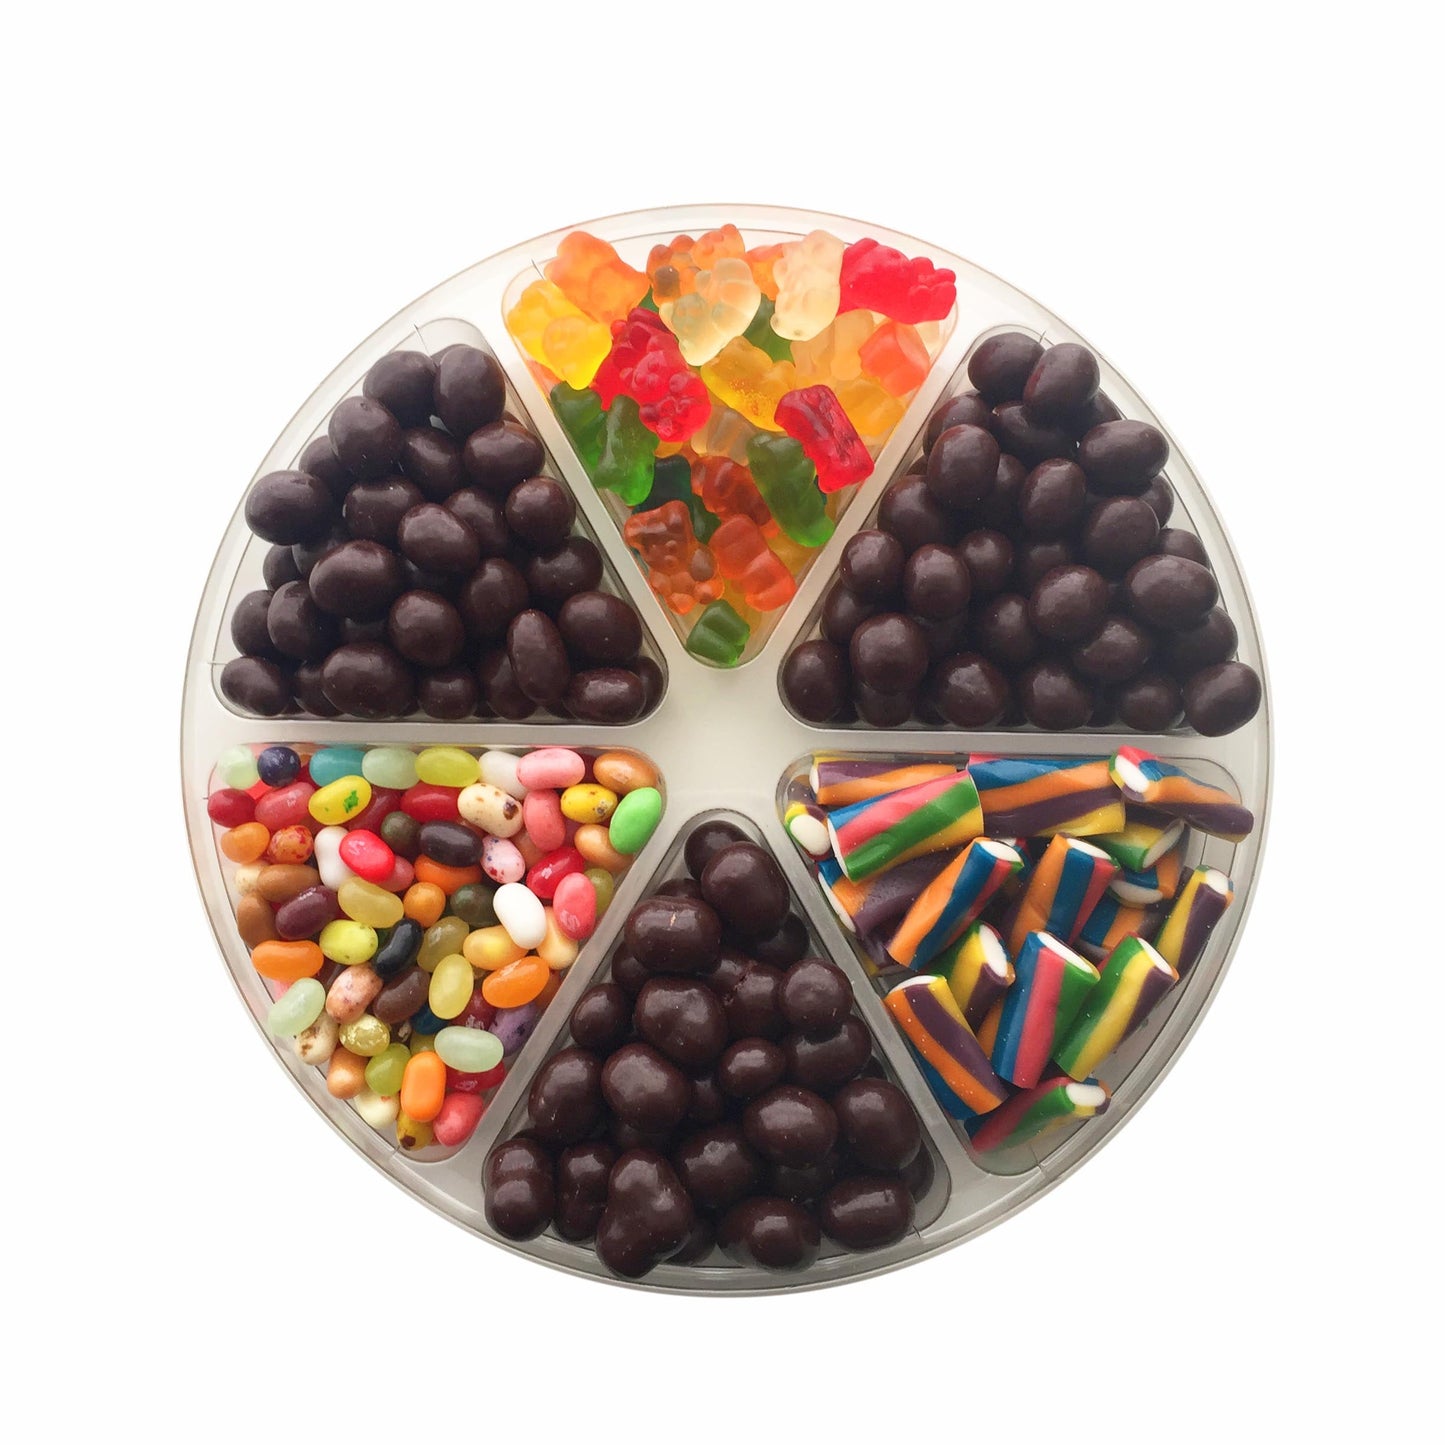 Chocolate and Candy Platter, Medium